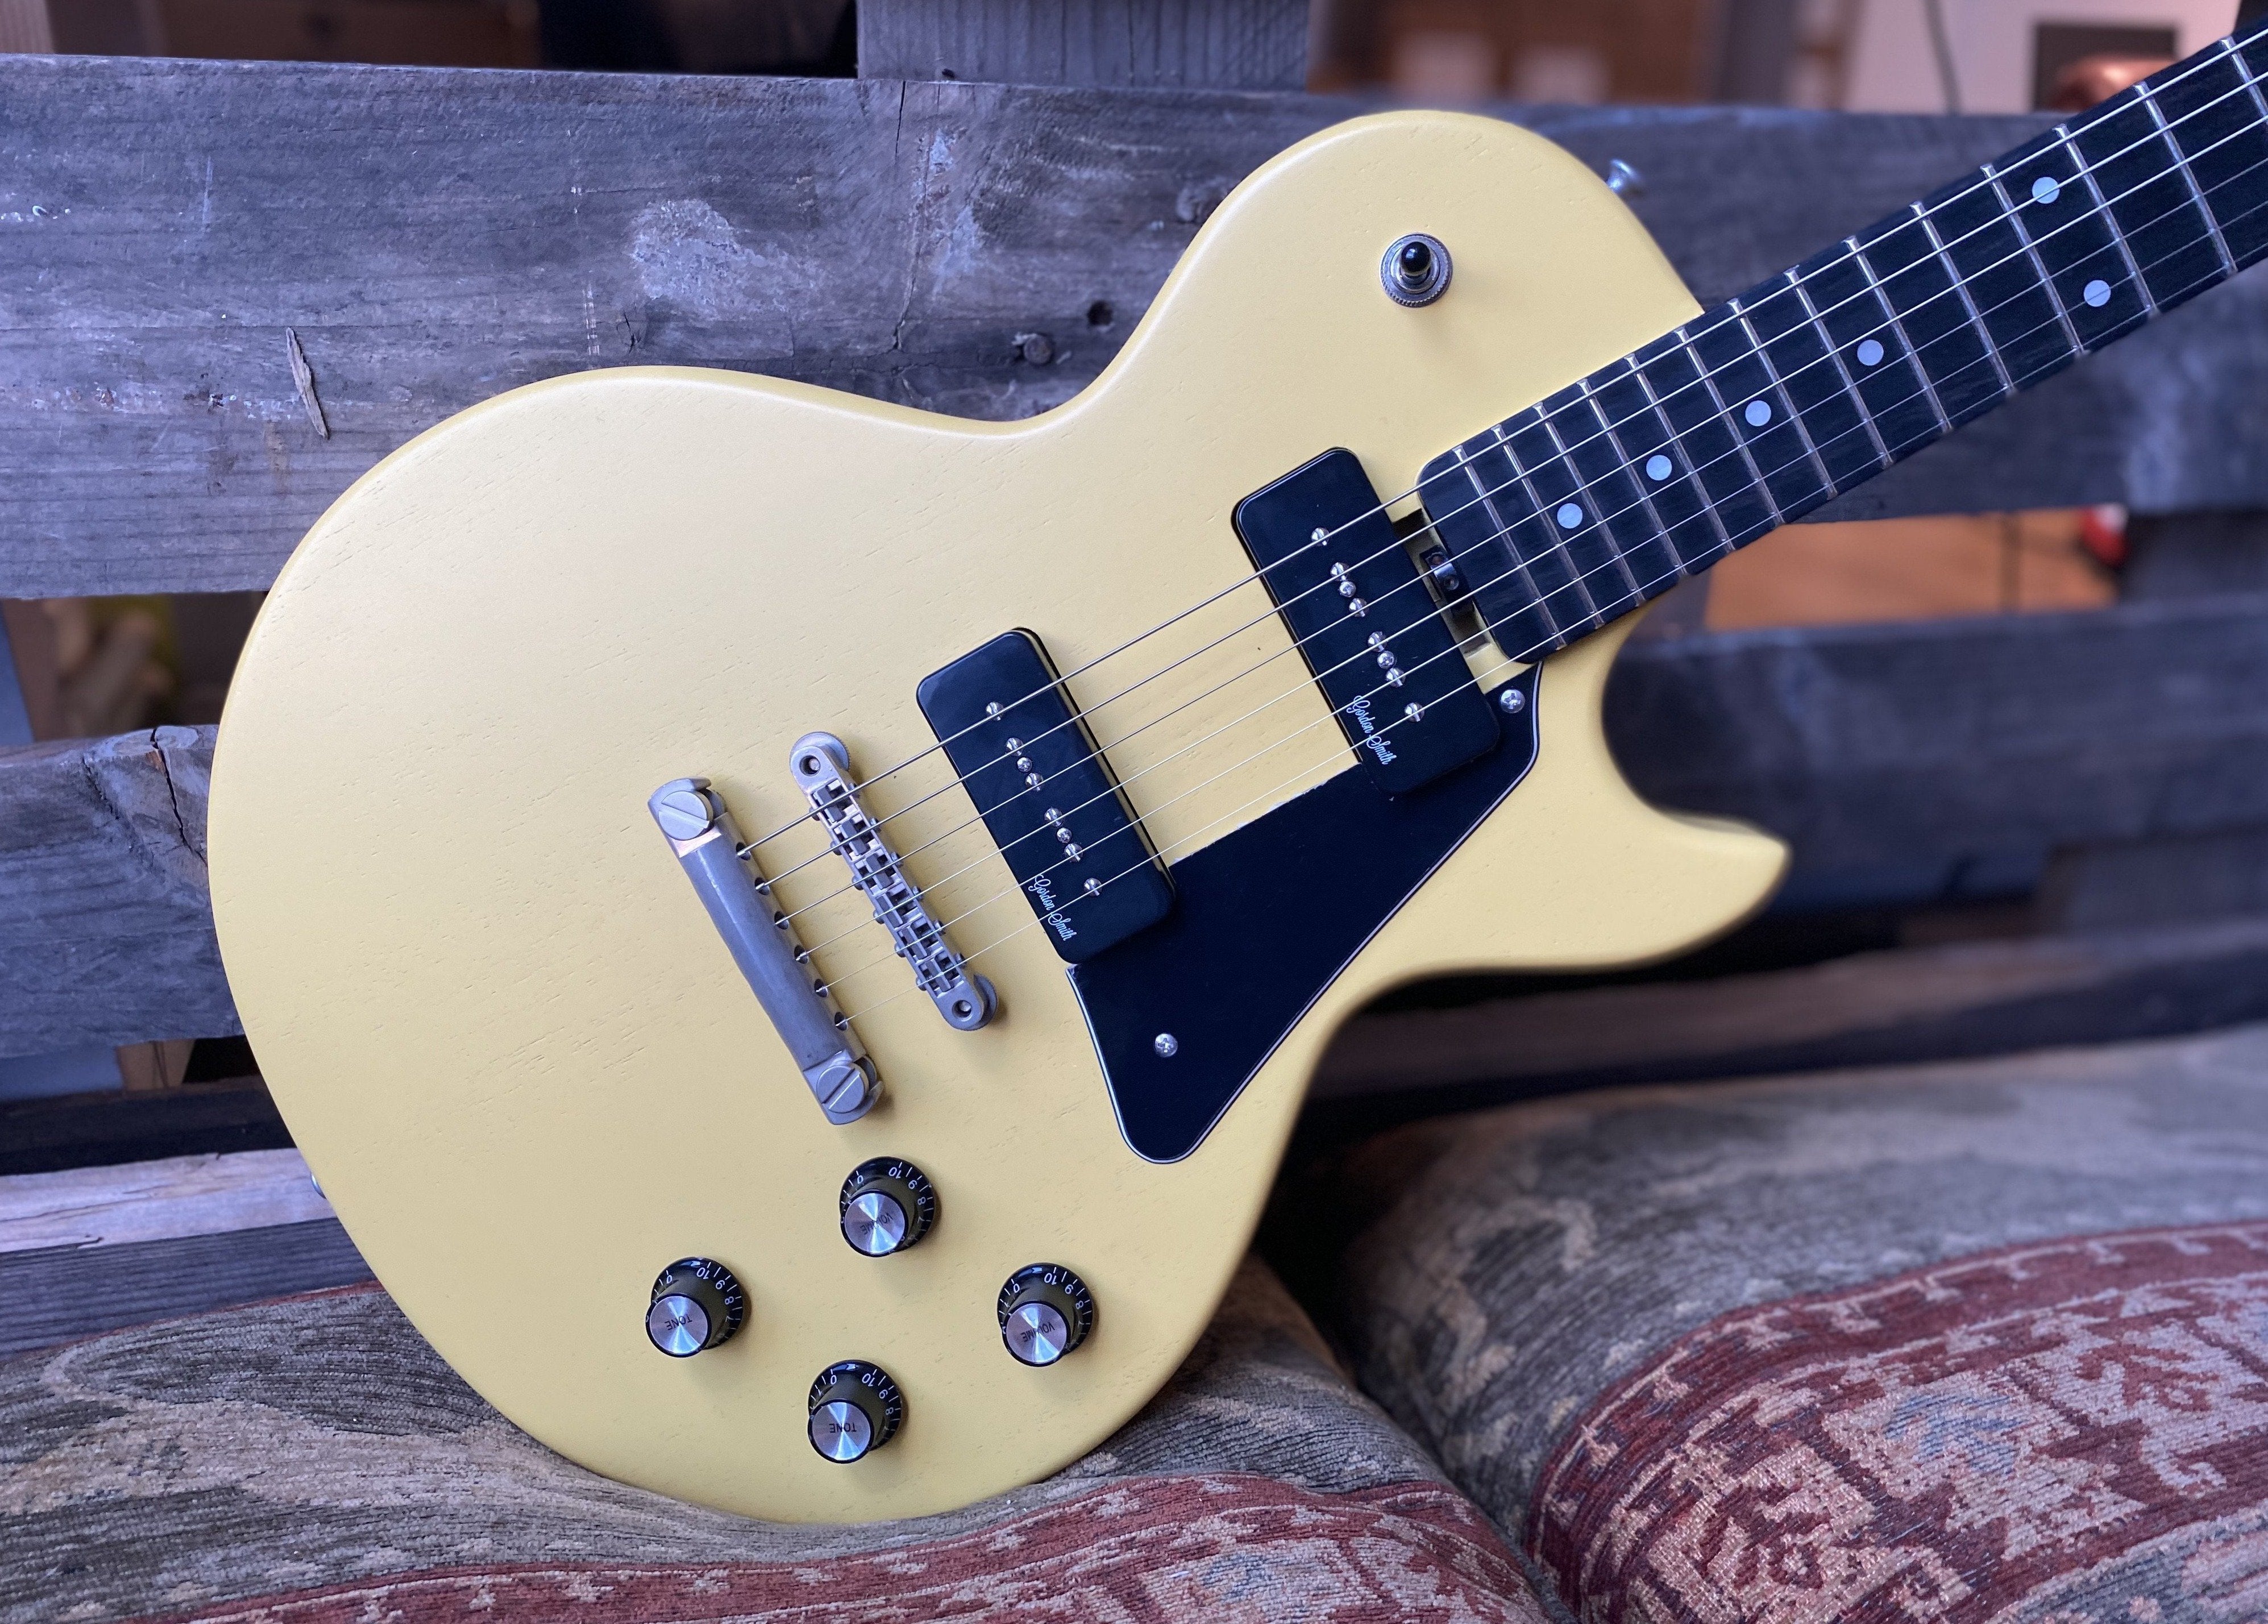 Gordon Smith GS2 Custom Classic Open TV Yellow Pore Satin, Electric Guitar for sale at Richards Guitars.